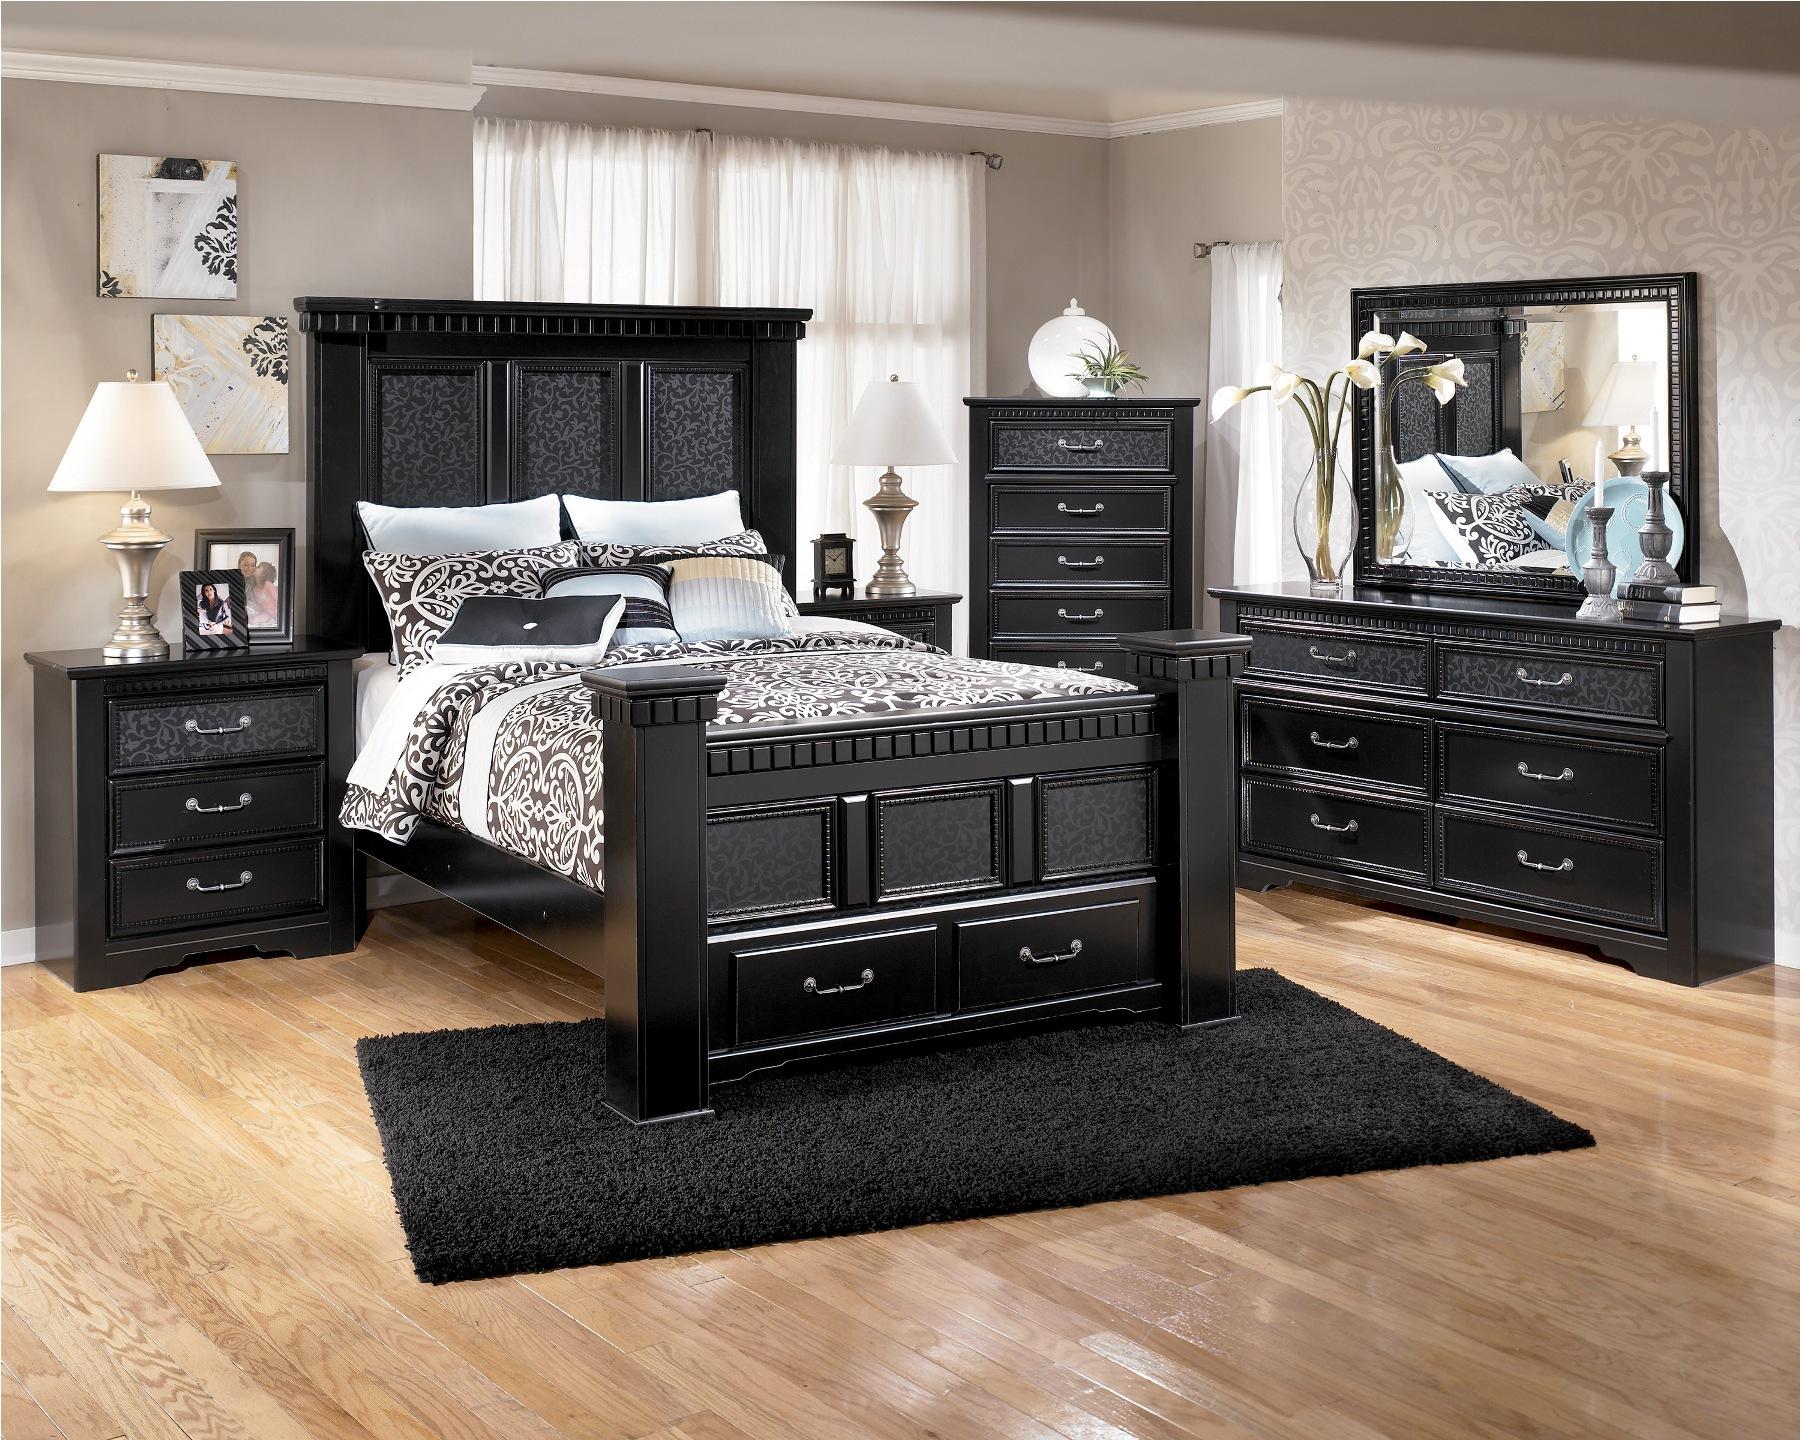 bedroom decor ideas for black furniture